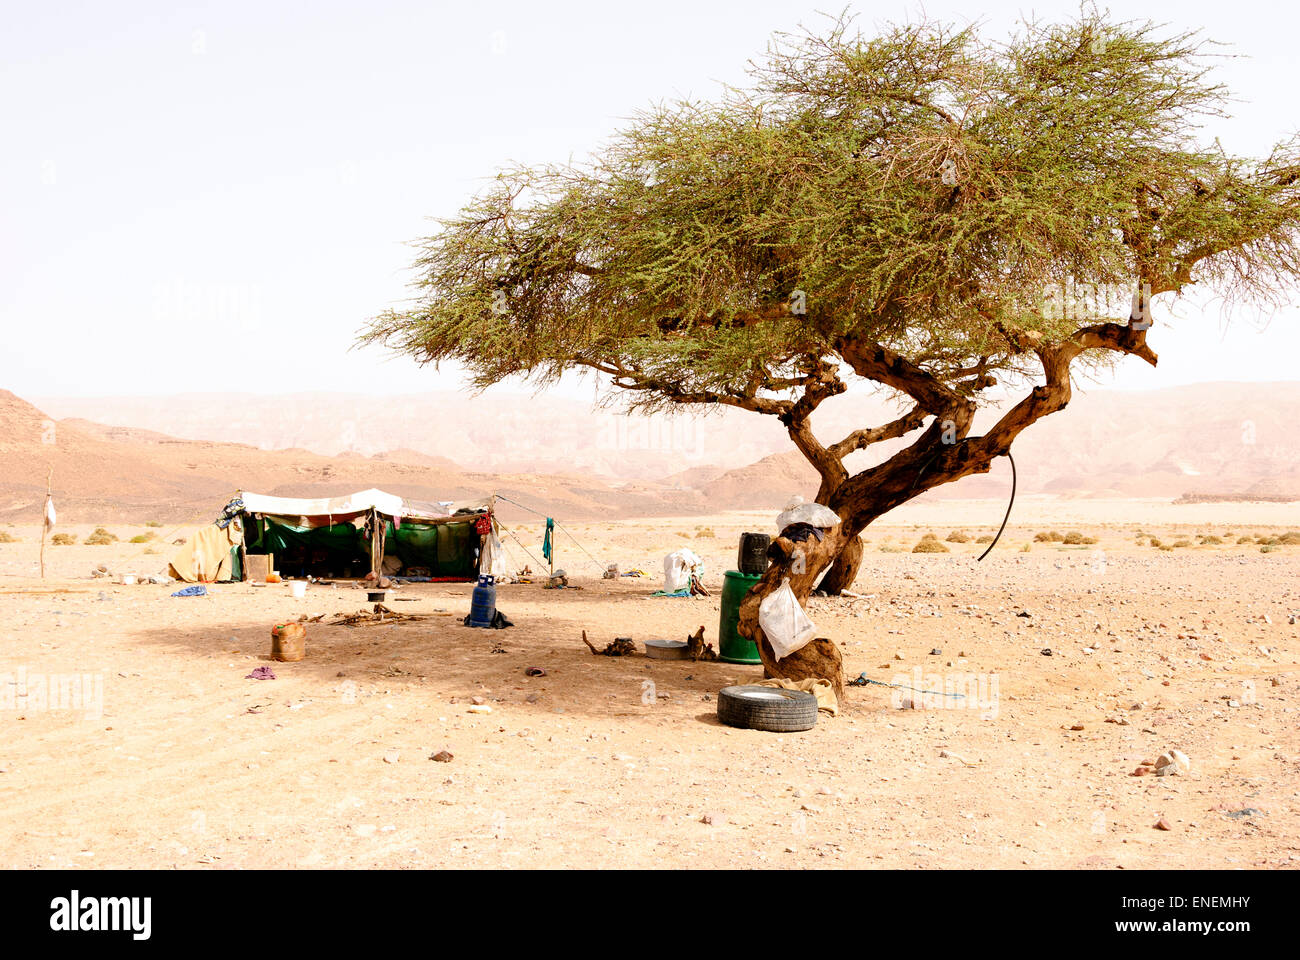 Bedouin tent in the arada desert - Sinai Peninsula, Egypt Stock Photo